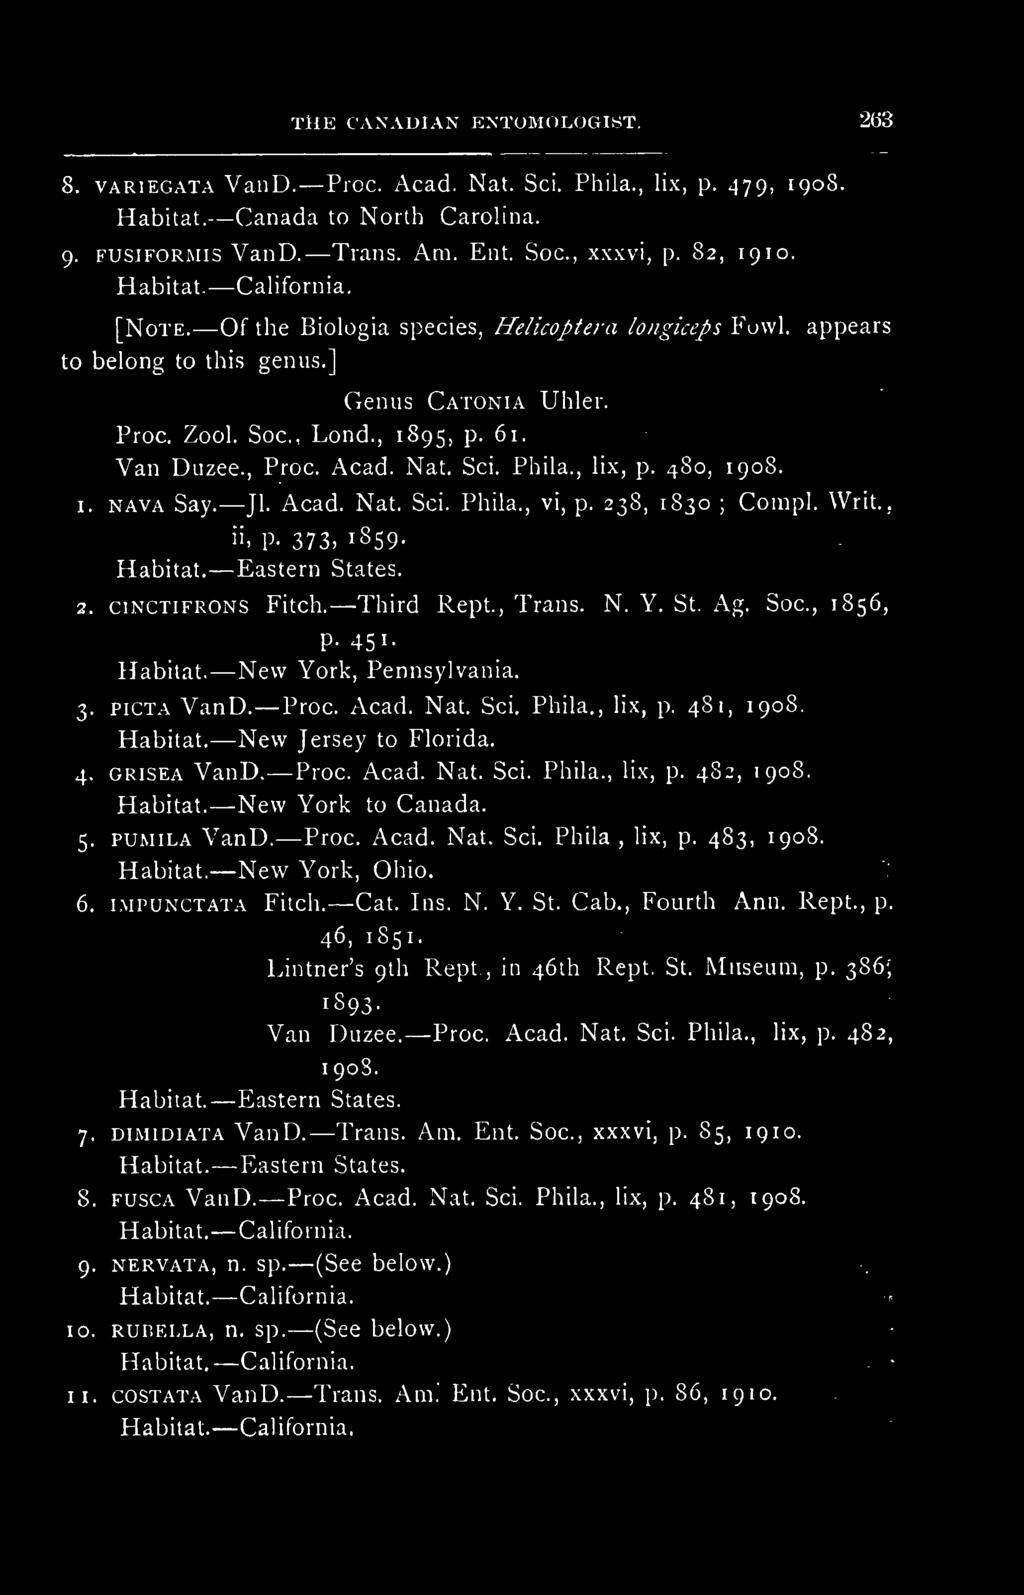 , Proc. Acad. Nat. Sci. Phila., lix, p. 480, 1908. 1. nava Say. Jl. Acad. Nat. Sci. Phila., vi, p. 238, 1830 ; Compl. Writ., ii> P- 373, 1859- Habitat. Eastern States. 2. cinctifrons Fitch.